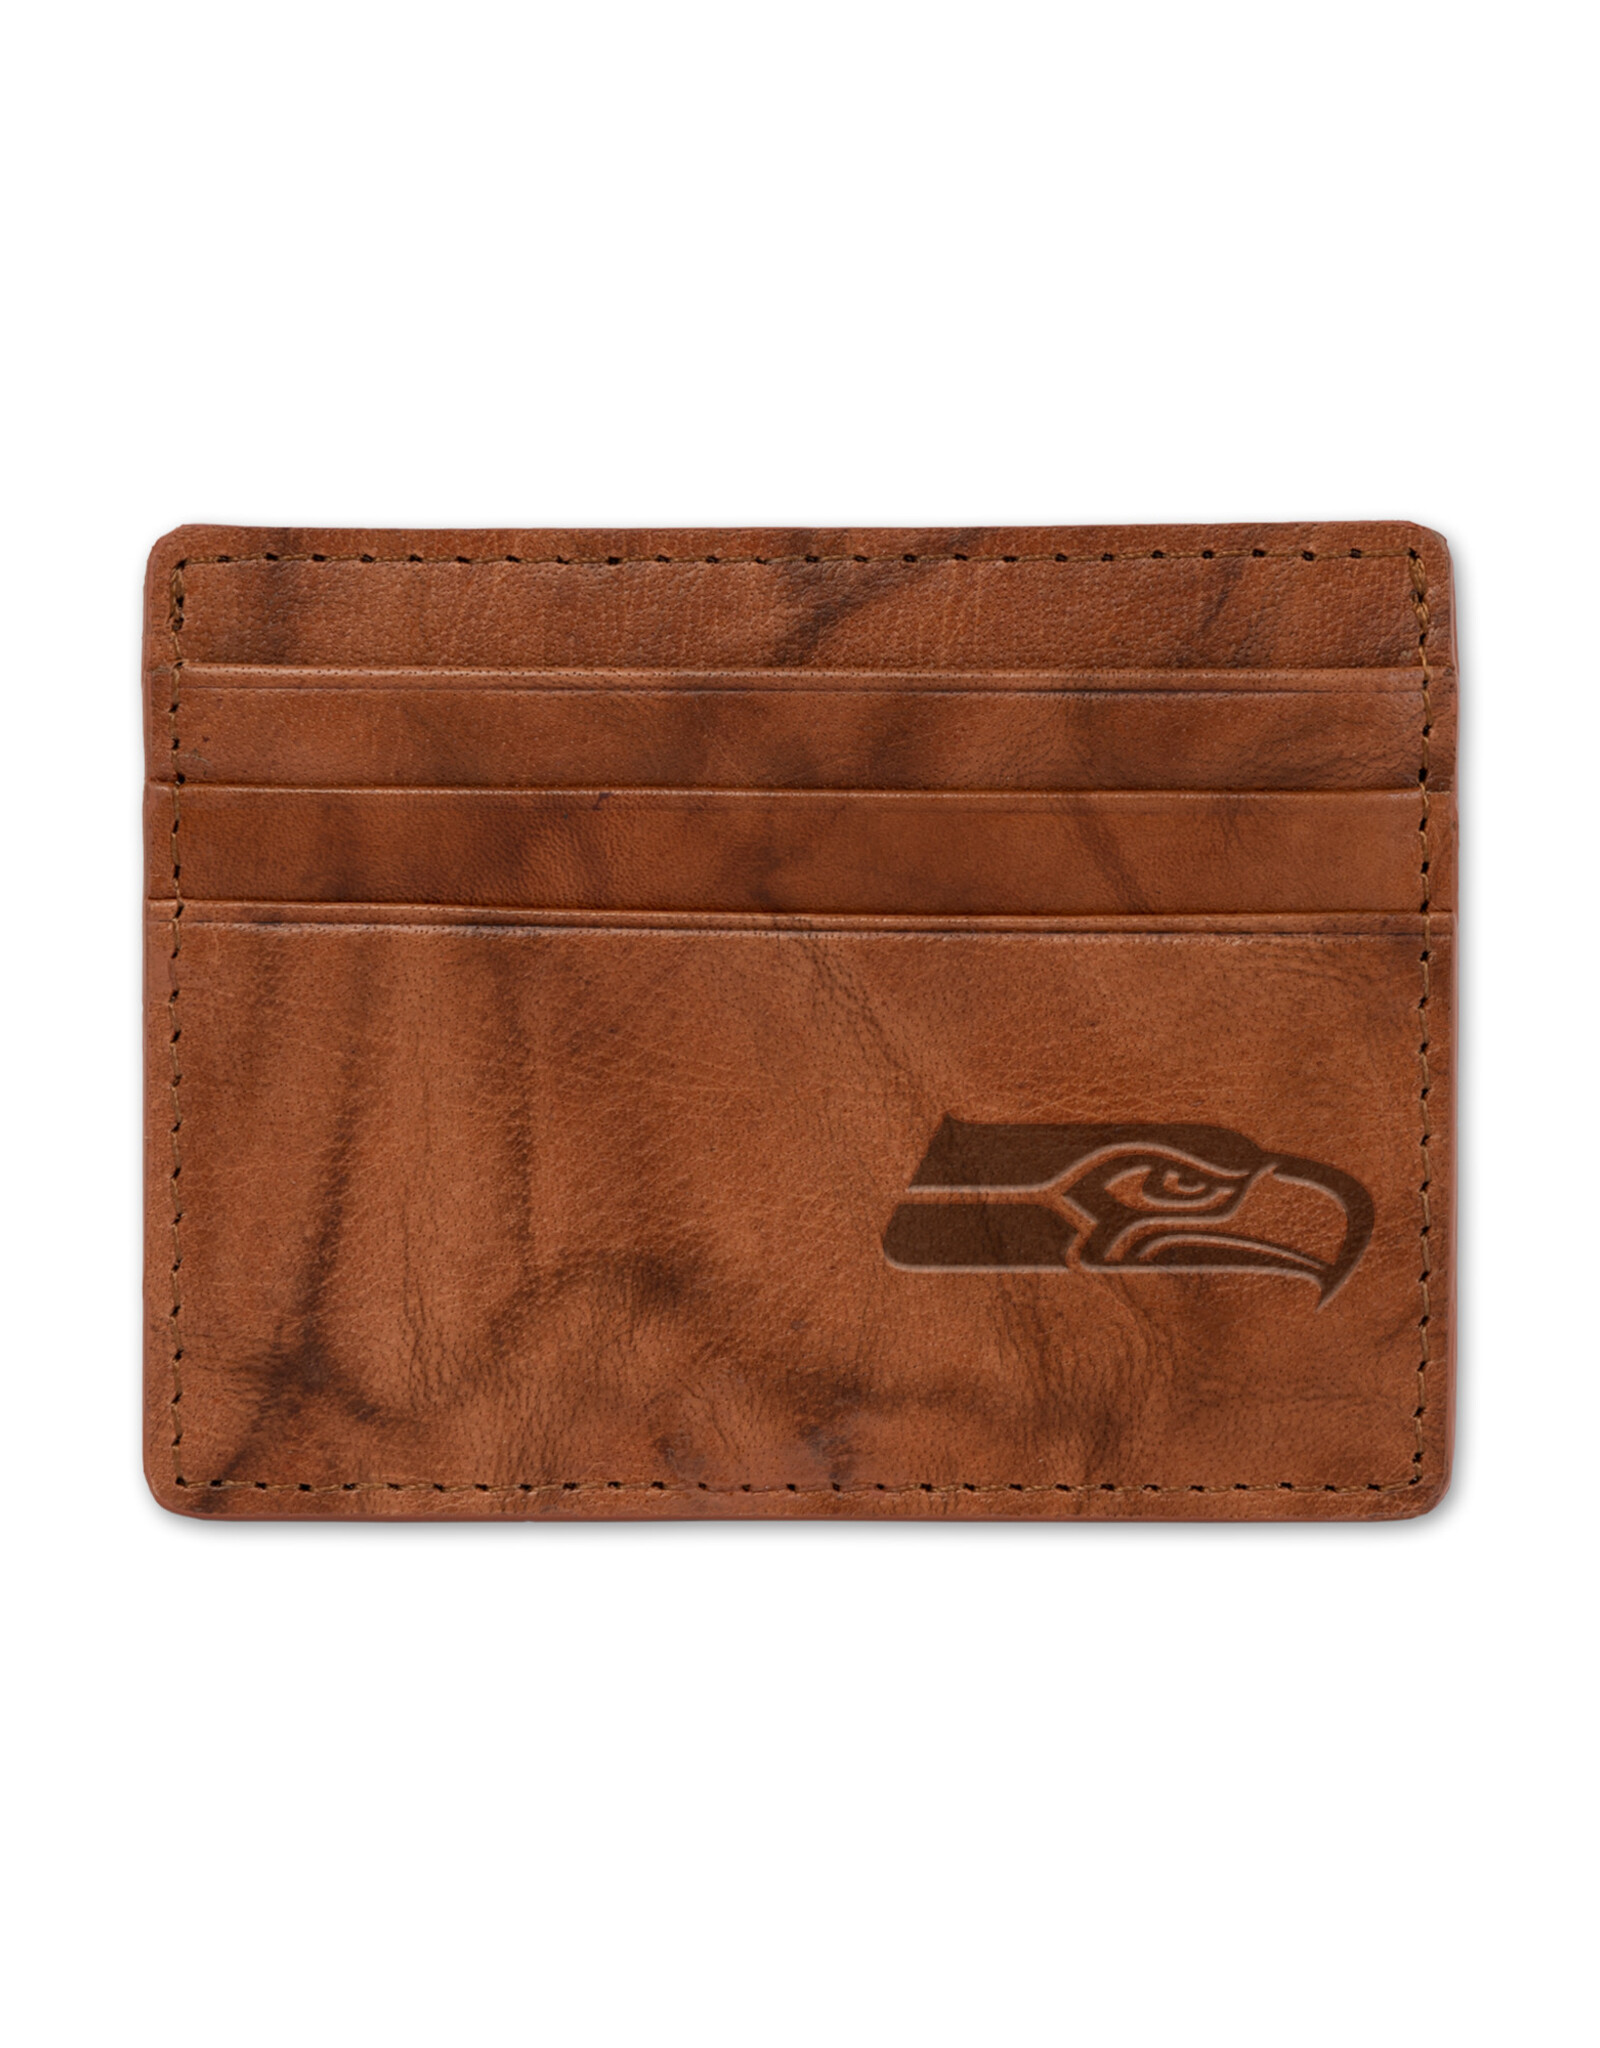 RICO INDUSTRIES Seattle Seahawks 2-in-1 Vintage Slider Billfold Wallet Set